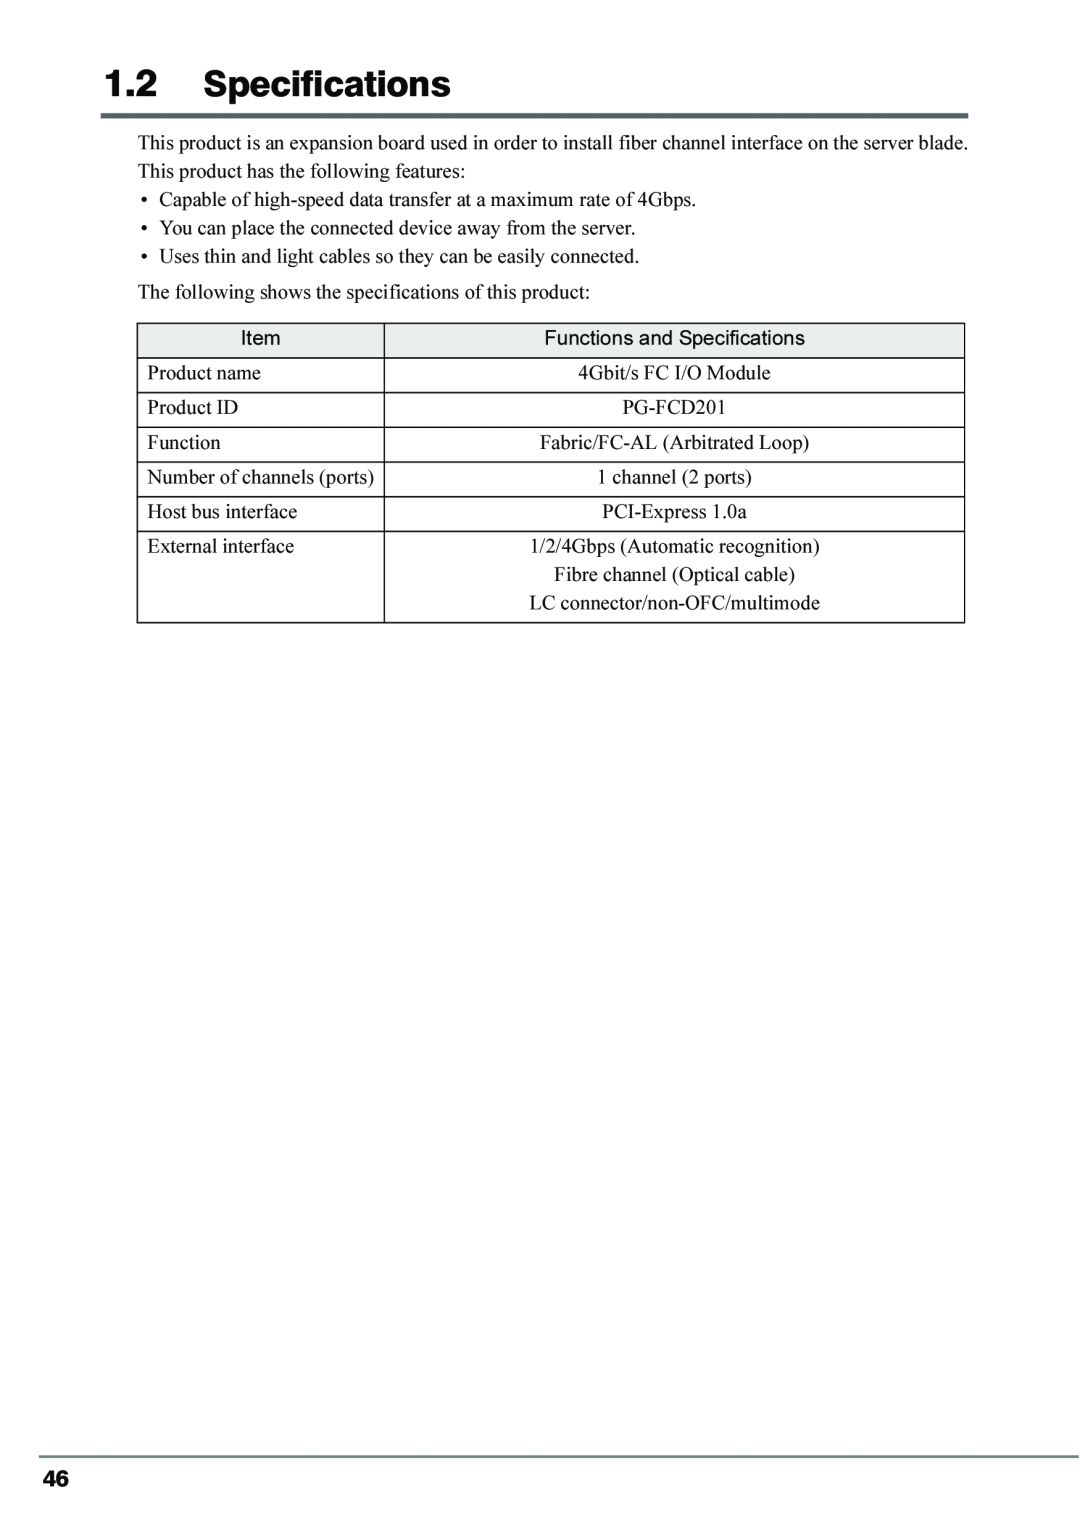 Fujitsu 4Gbit/s FC I/O Modules manual Specifications 